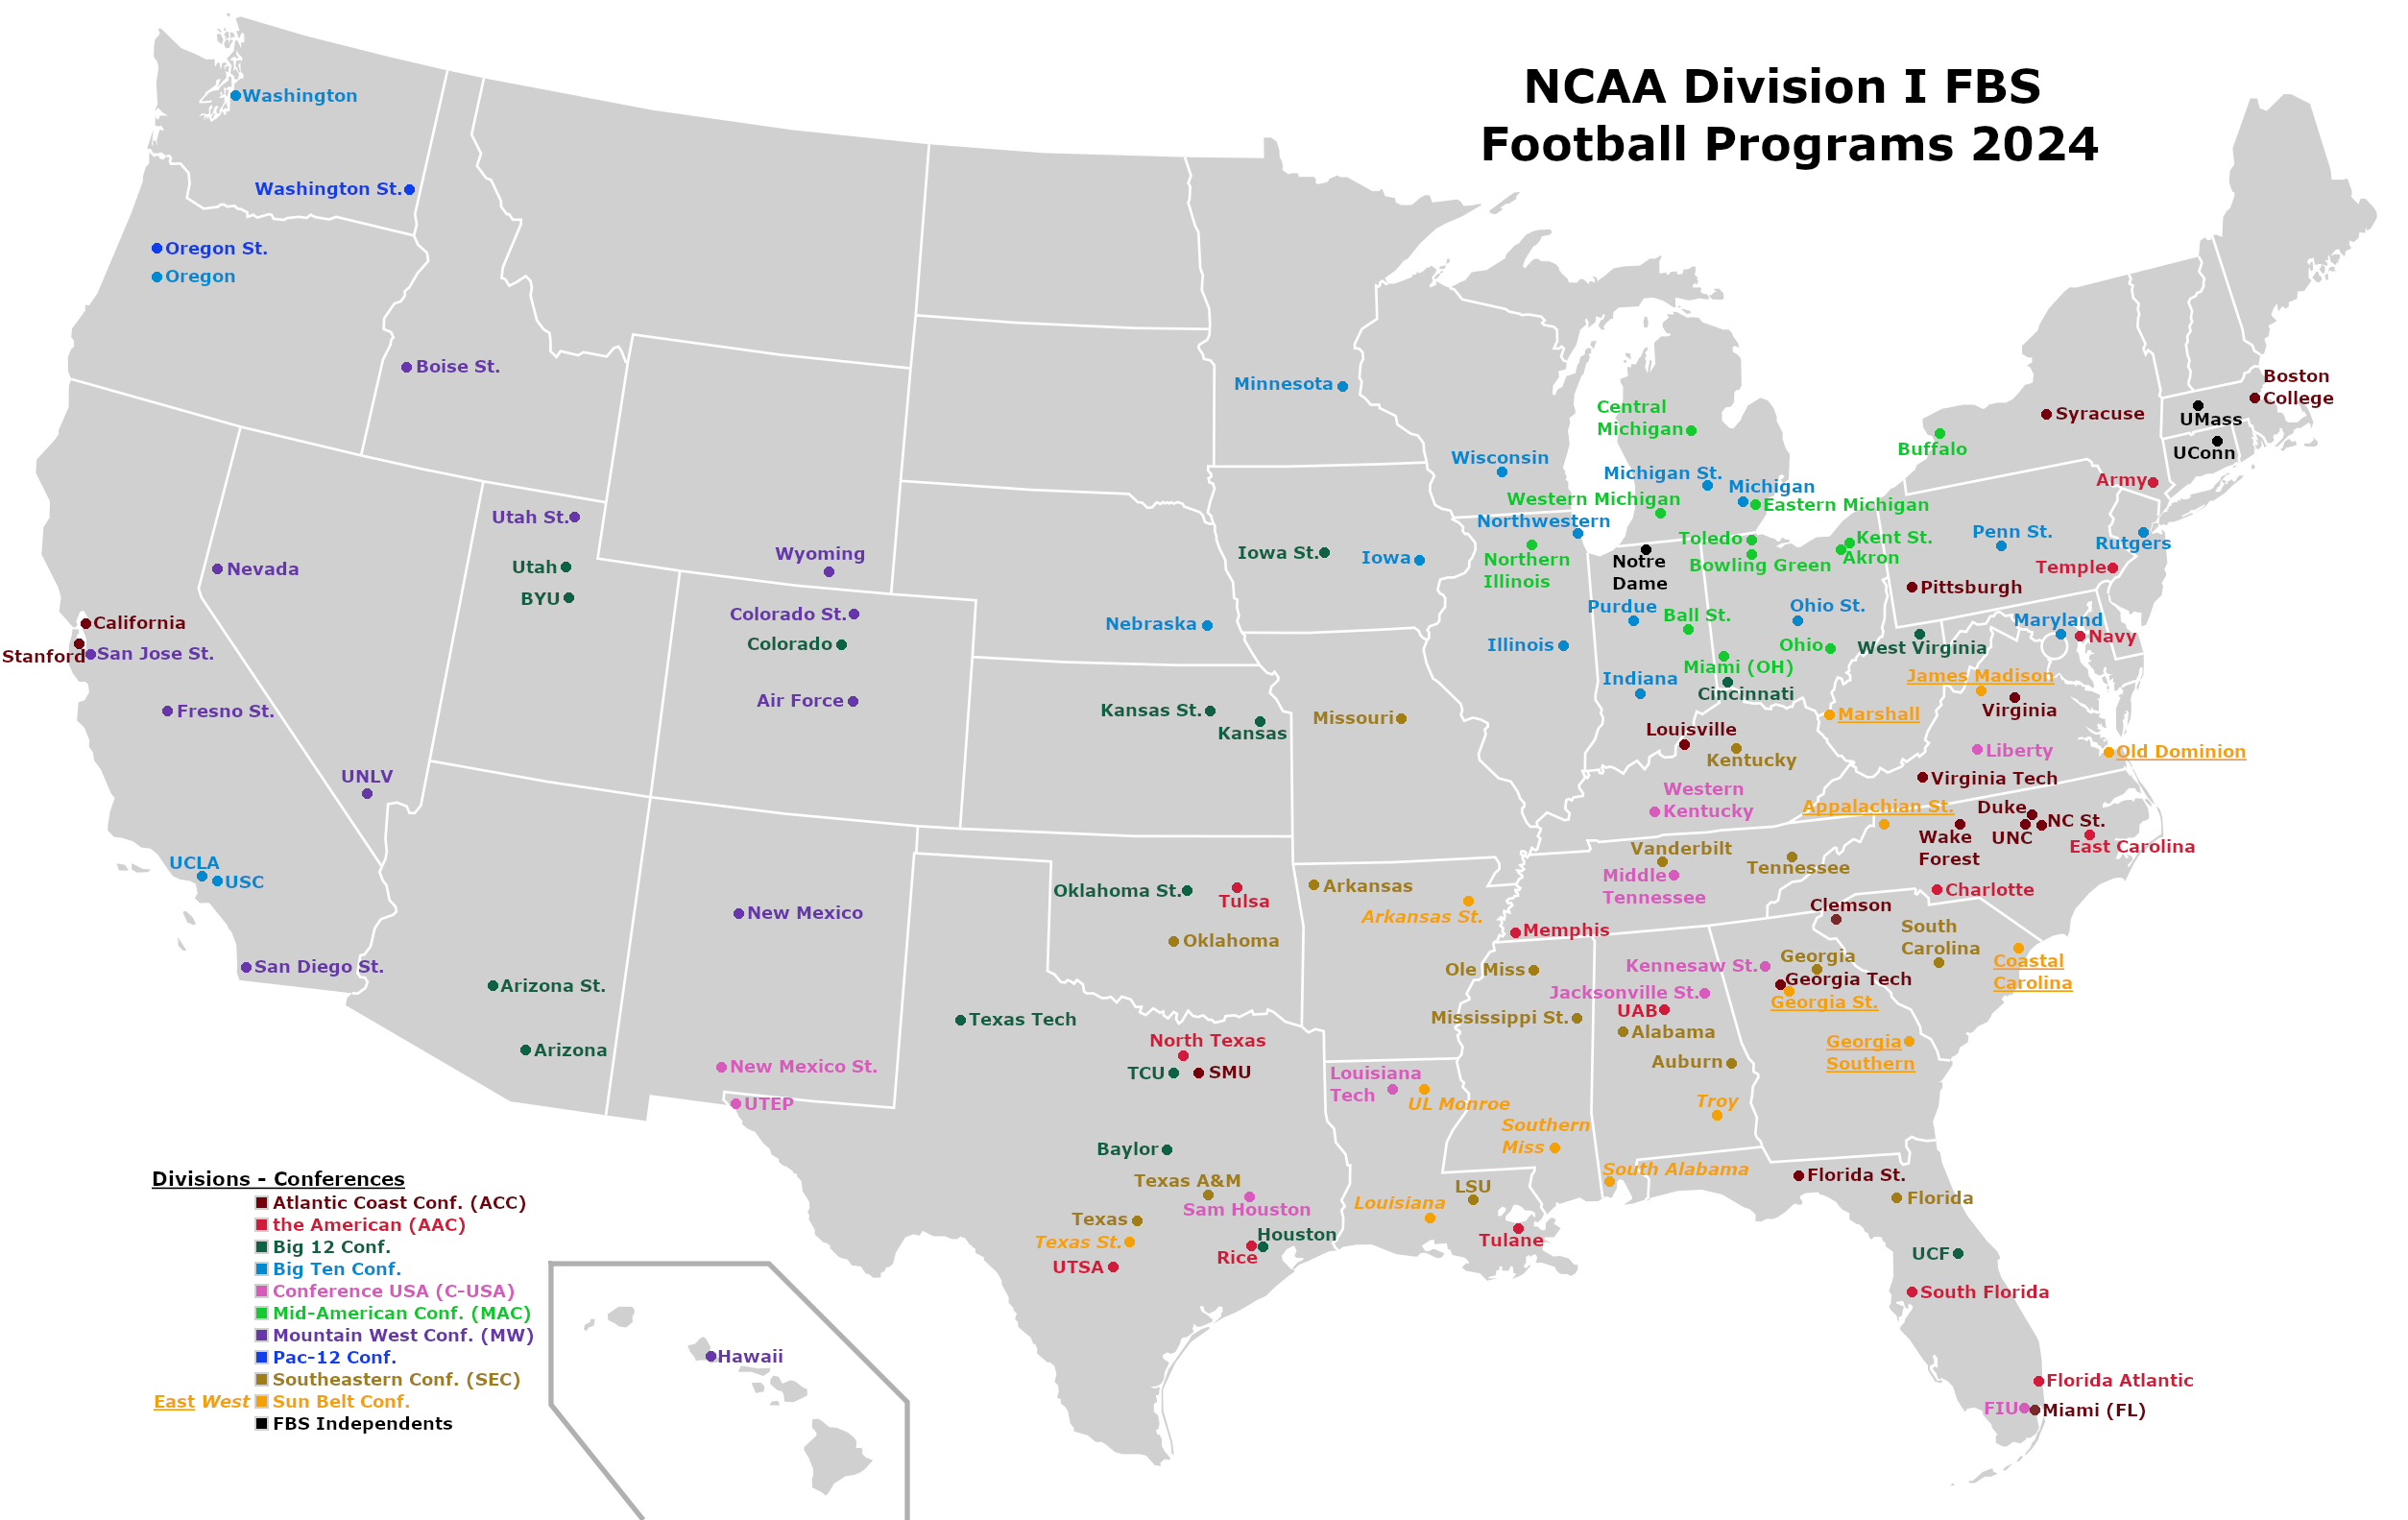 2011 NCAA Division I FBS football season - Wikipedia